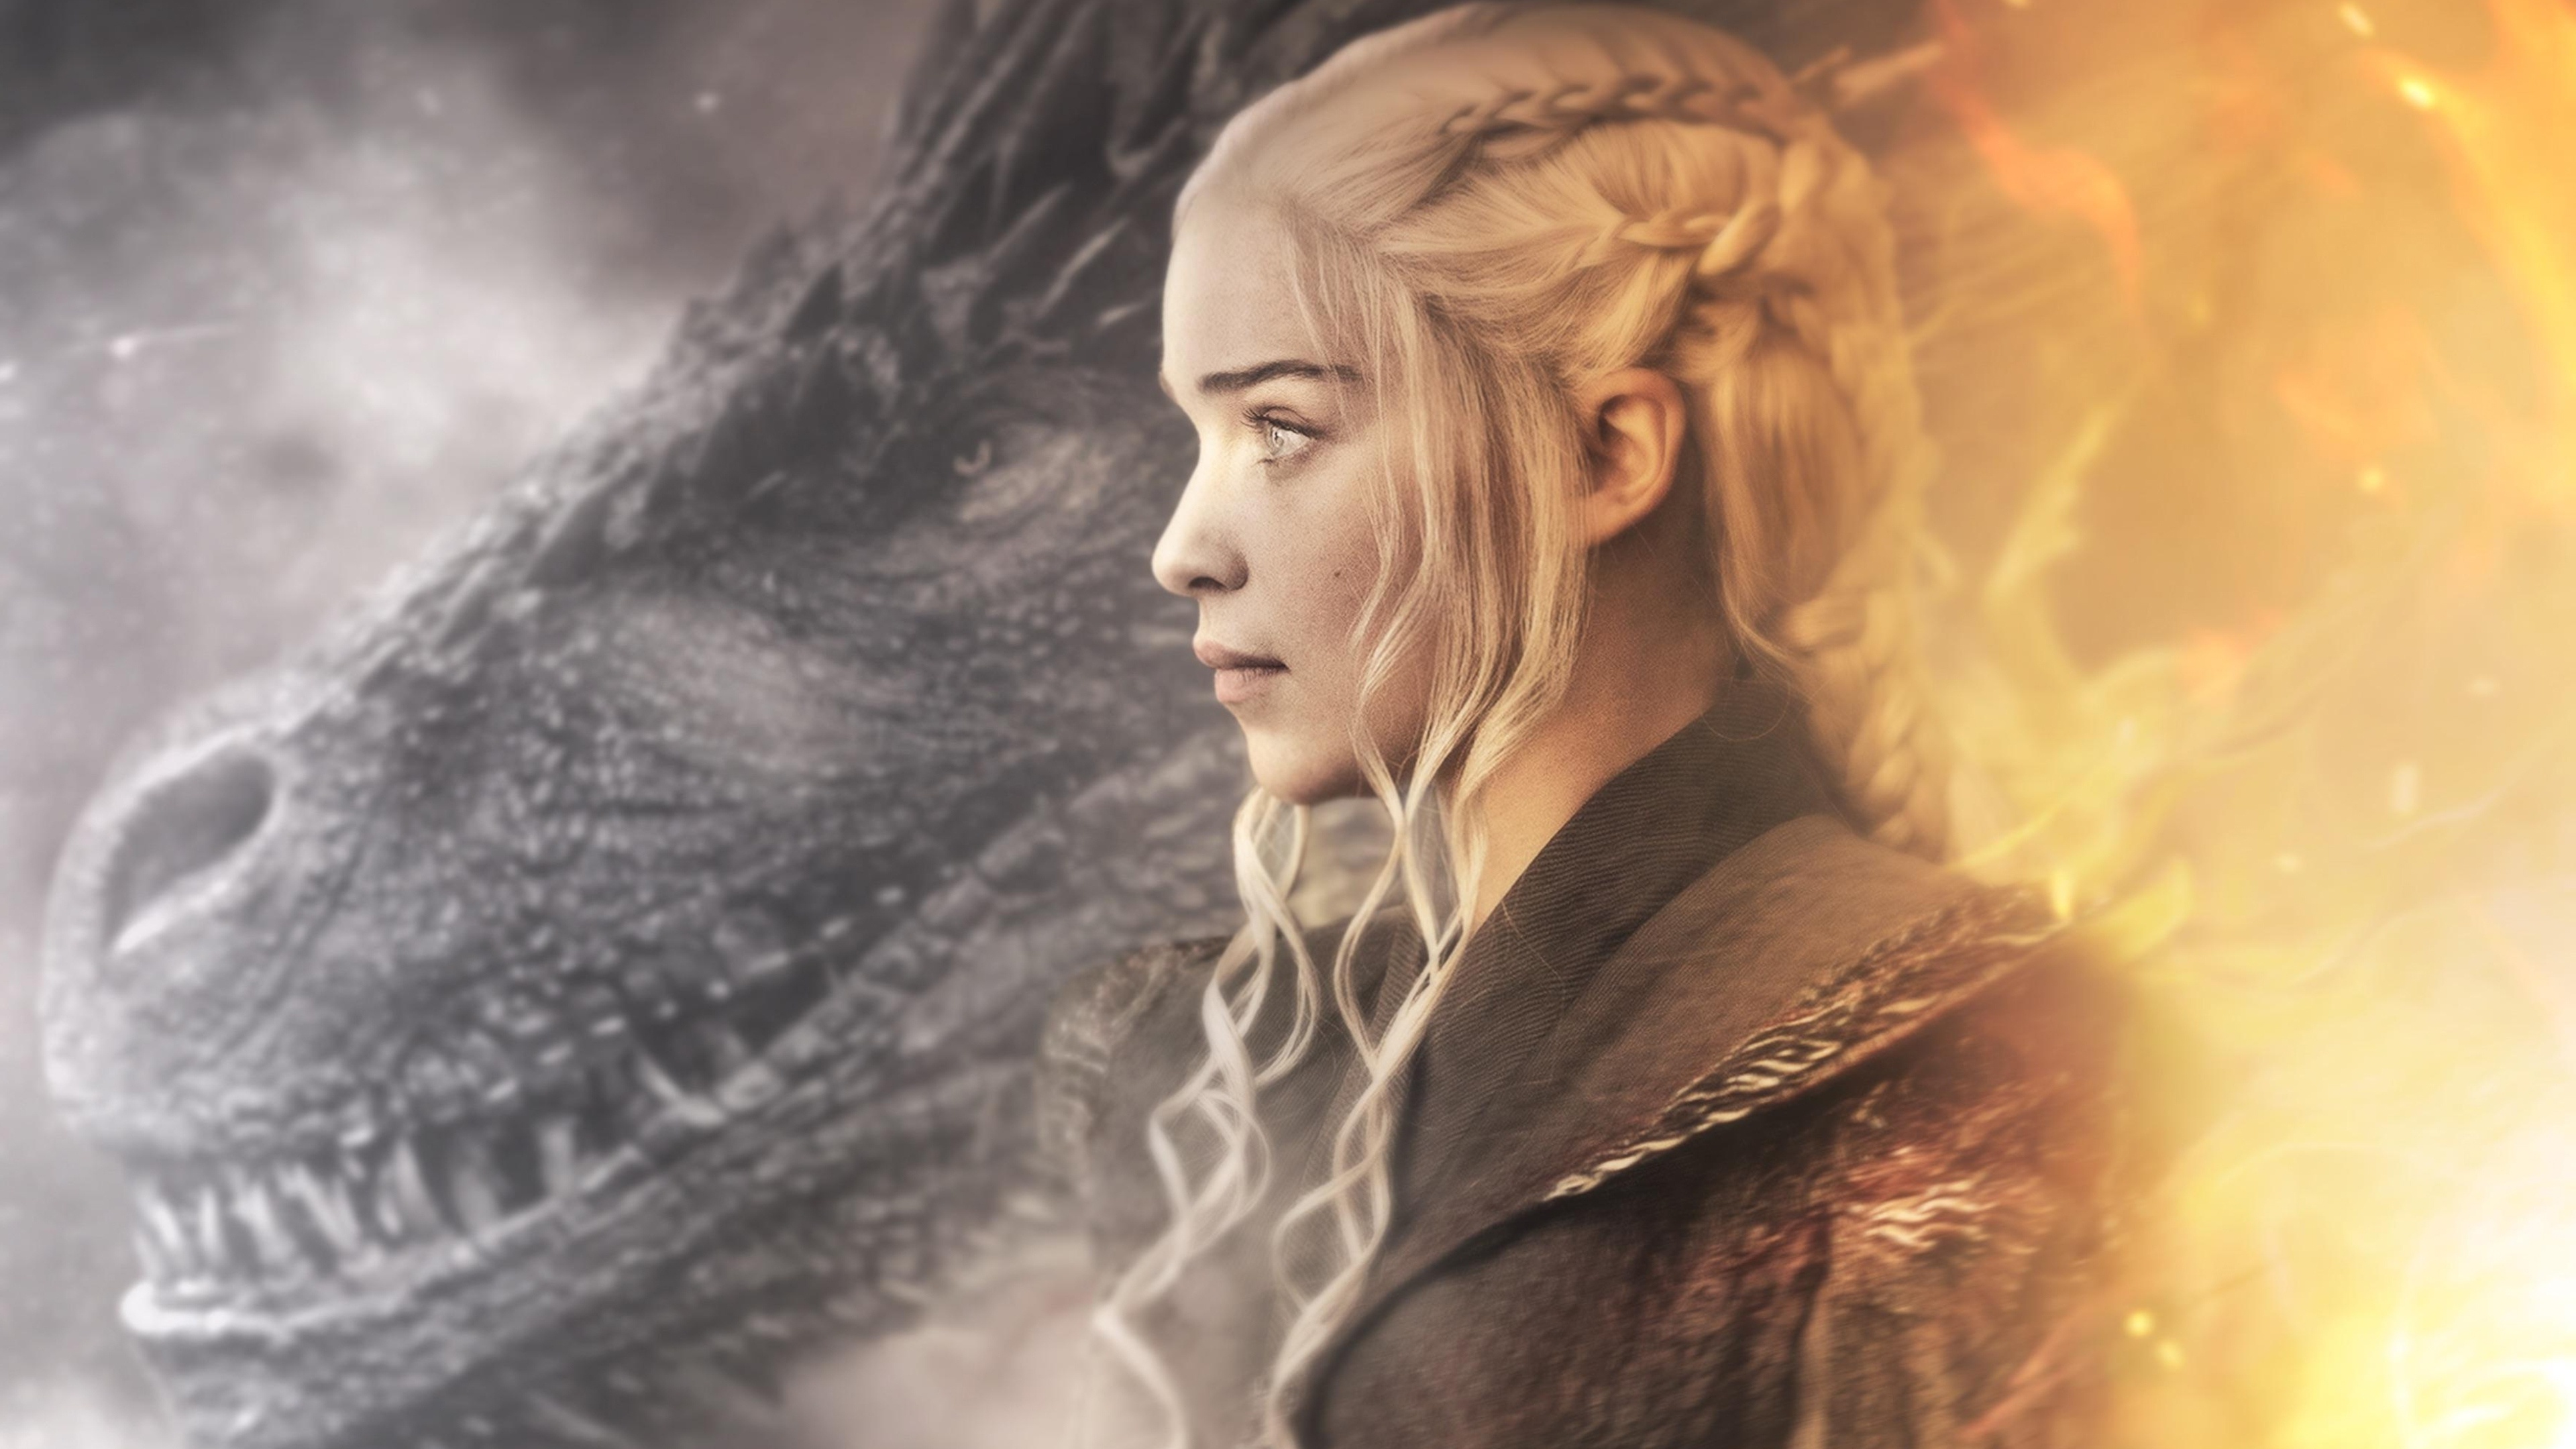 Game of Thrones wallpaper, Daenerys Targaryen profile view, Final season imagery, Epic quality, 3840x2160 4K Desktop